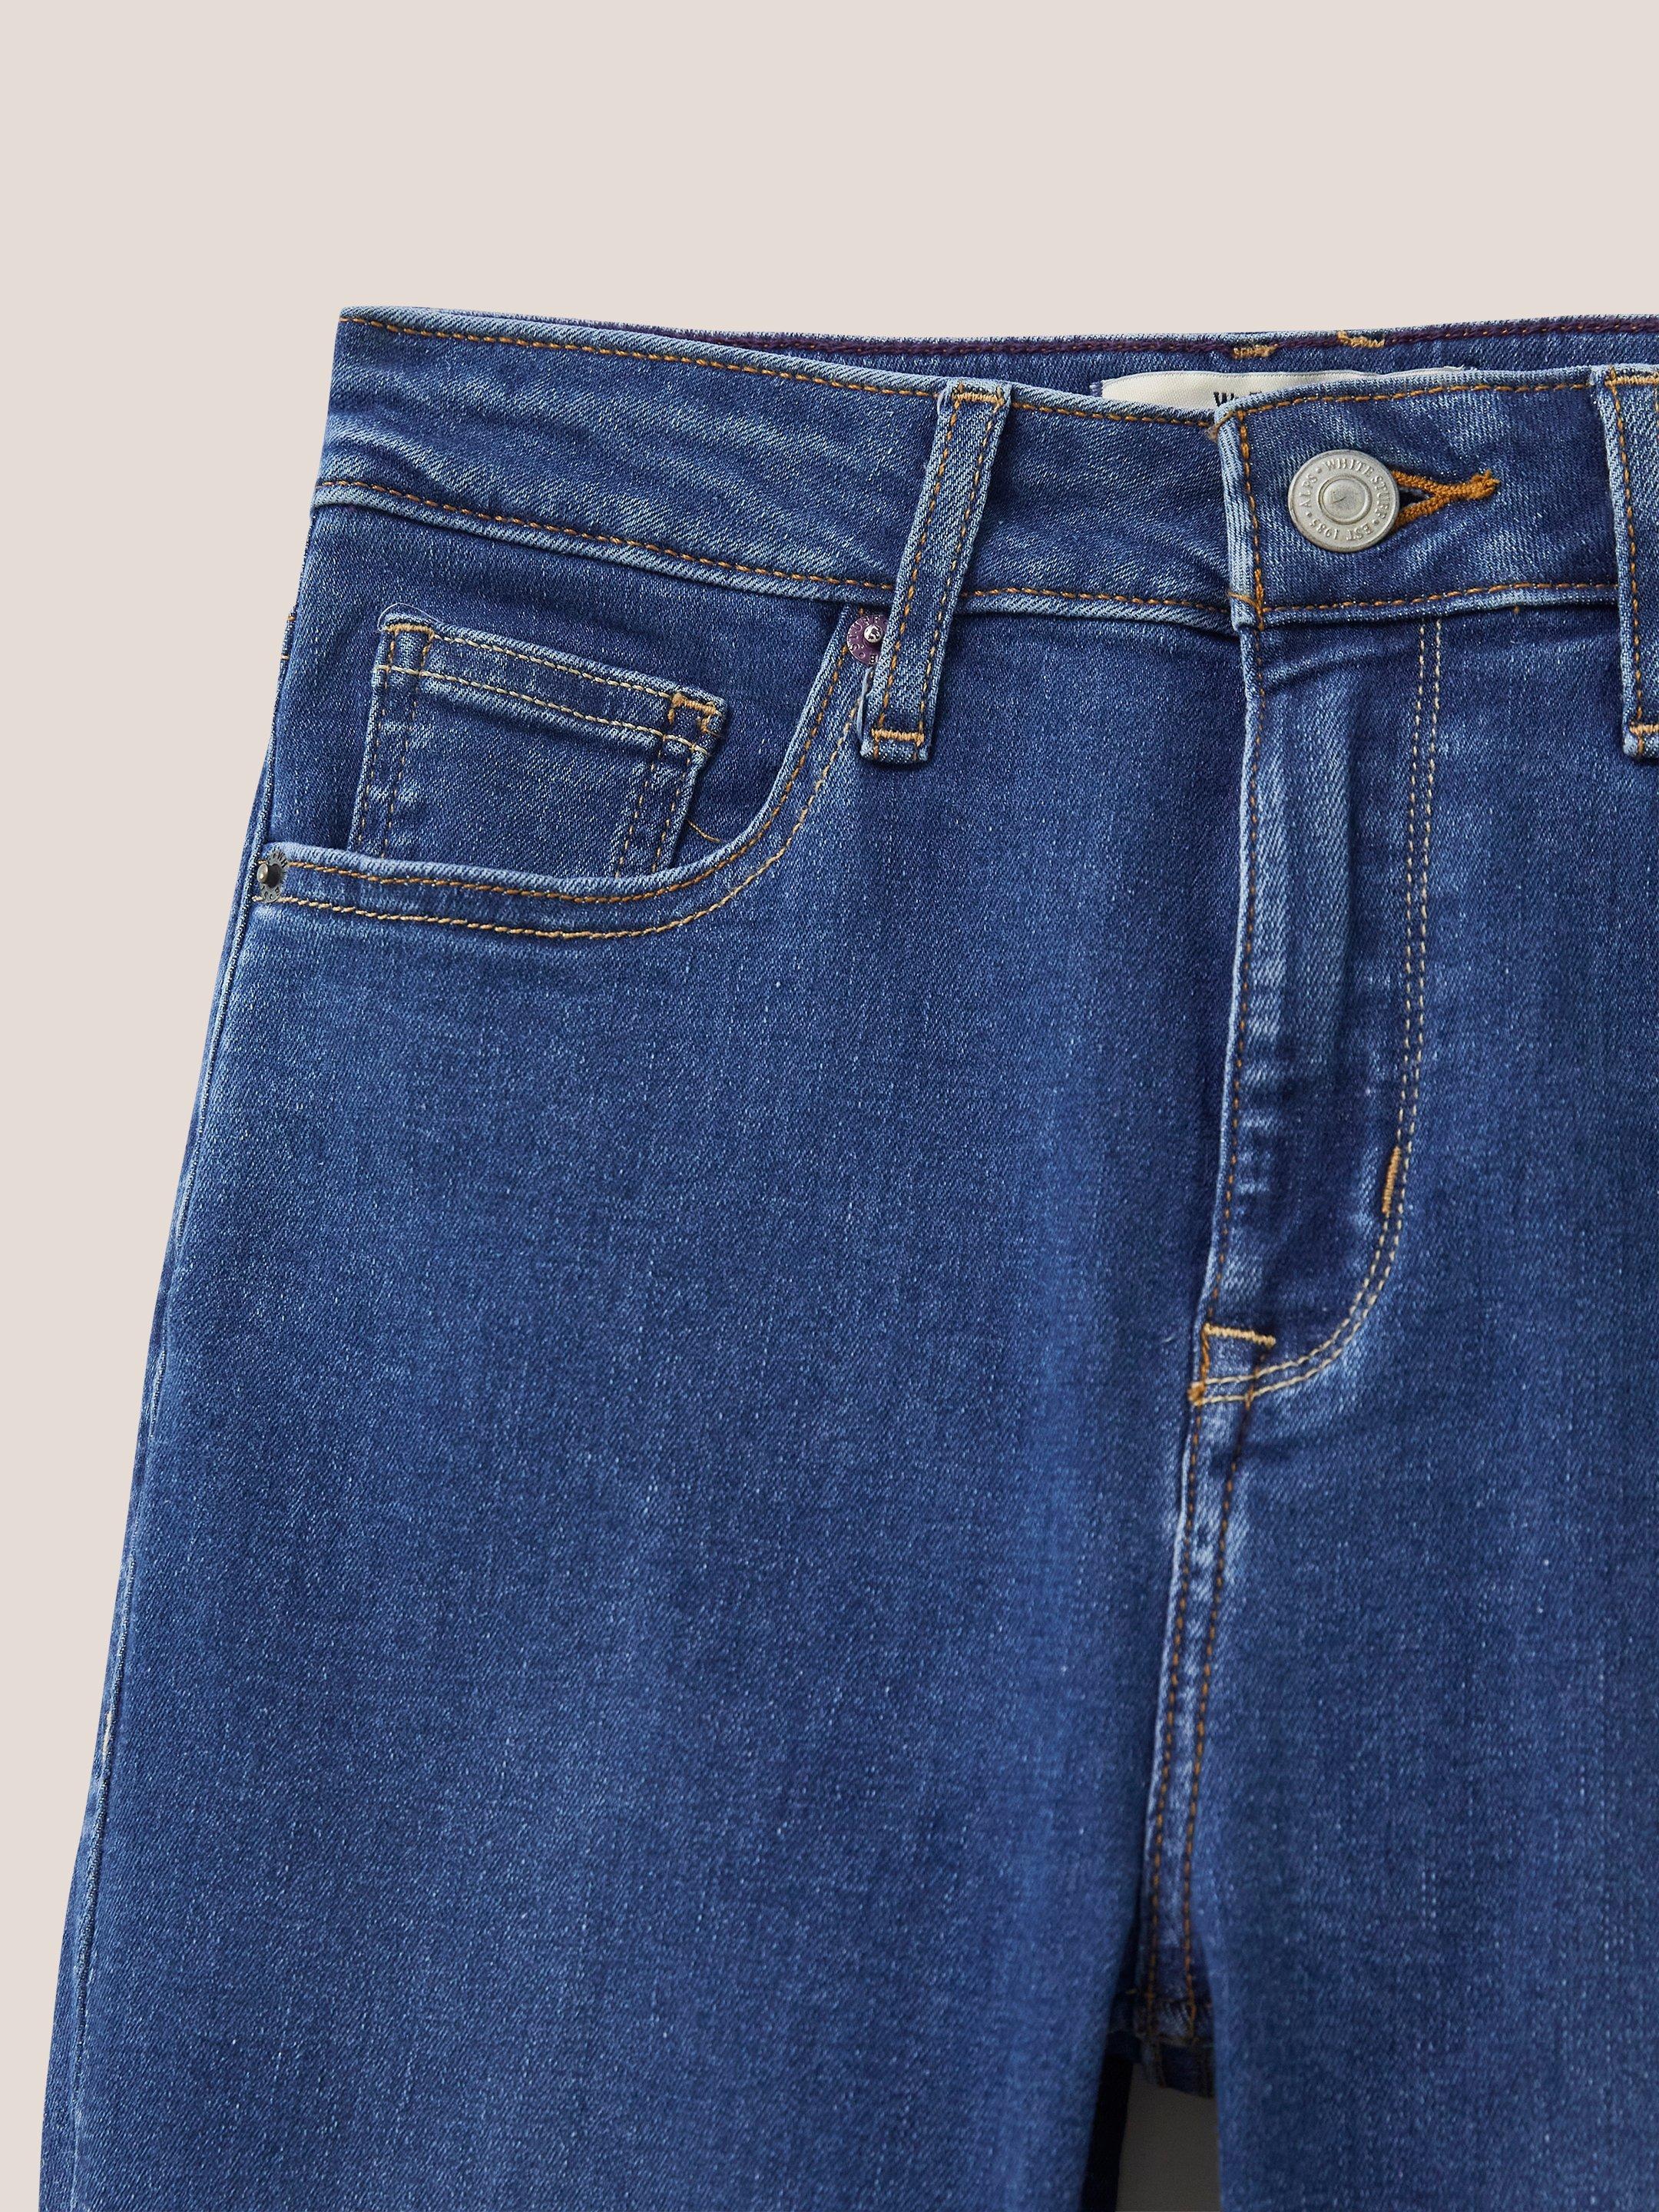 Amelia Skinny Jeans in LGT DENIM - FLAT DETAIL